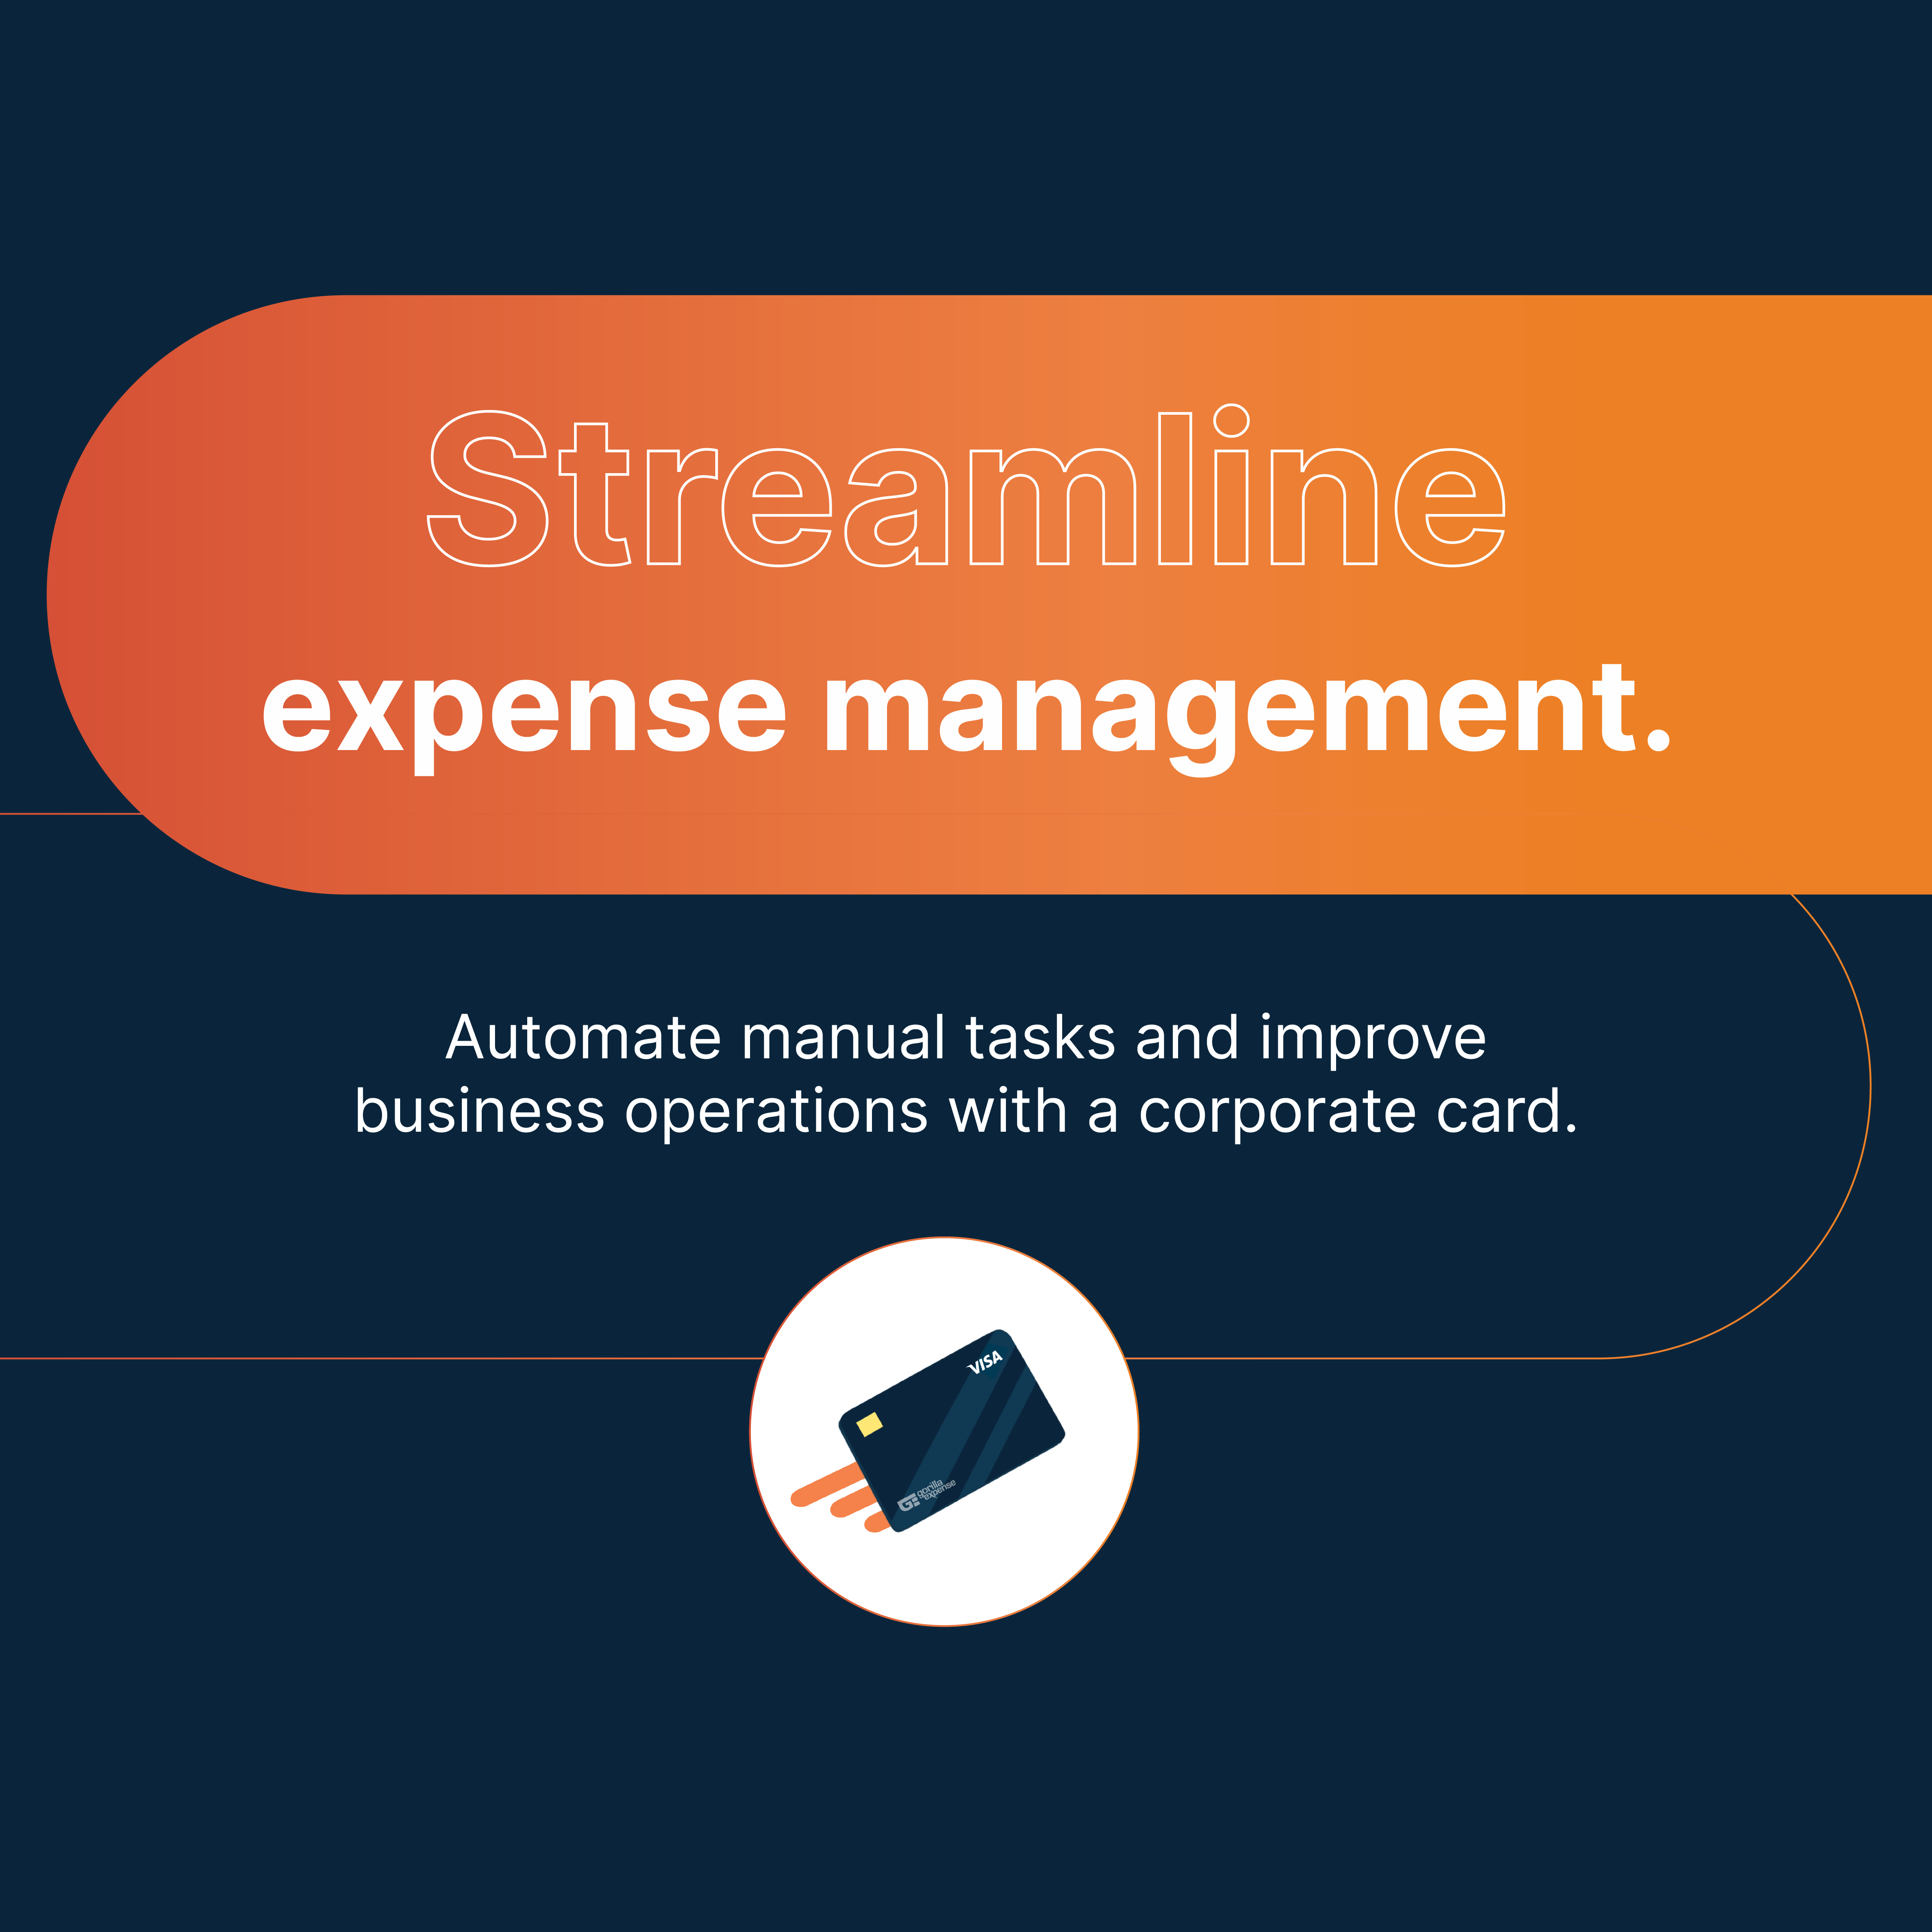 Streamline expense management